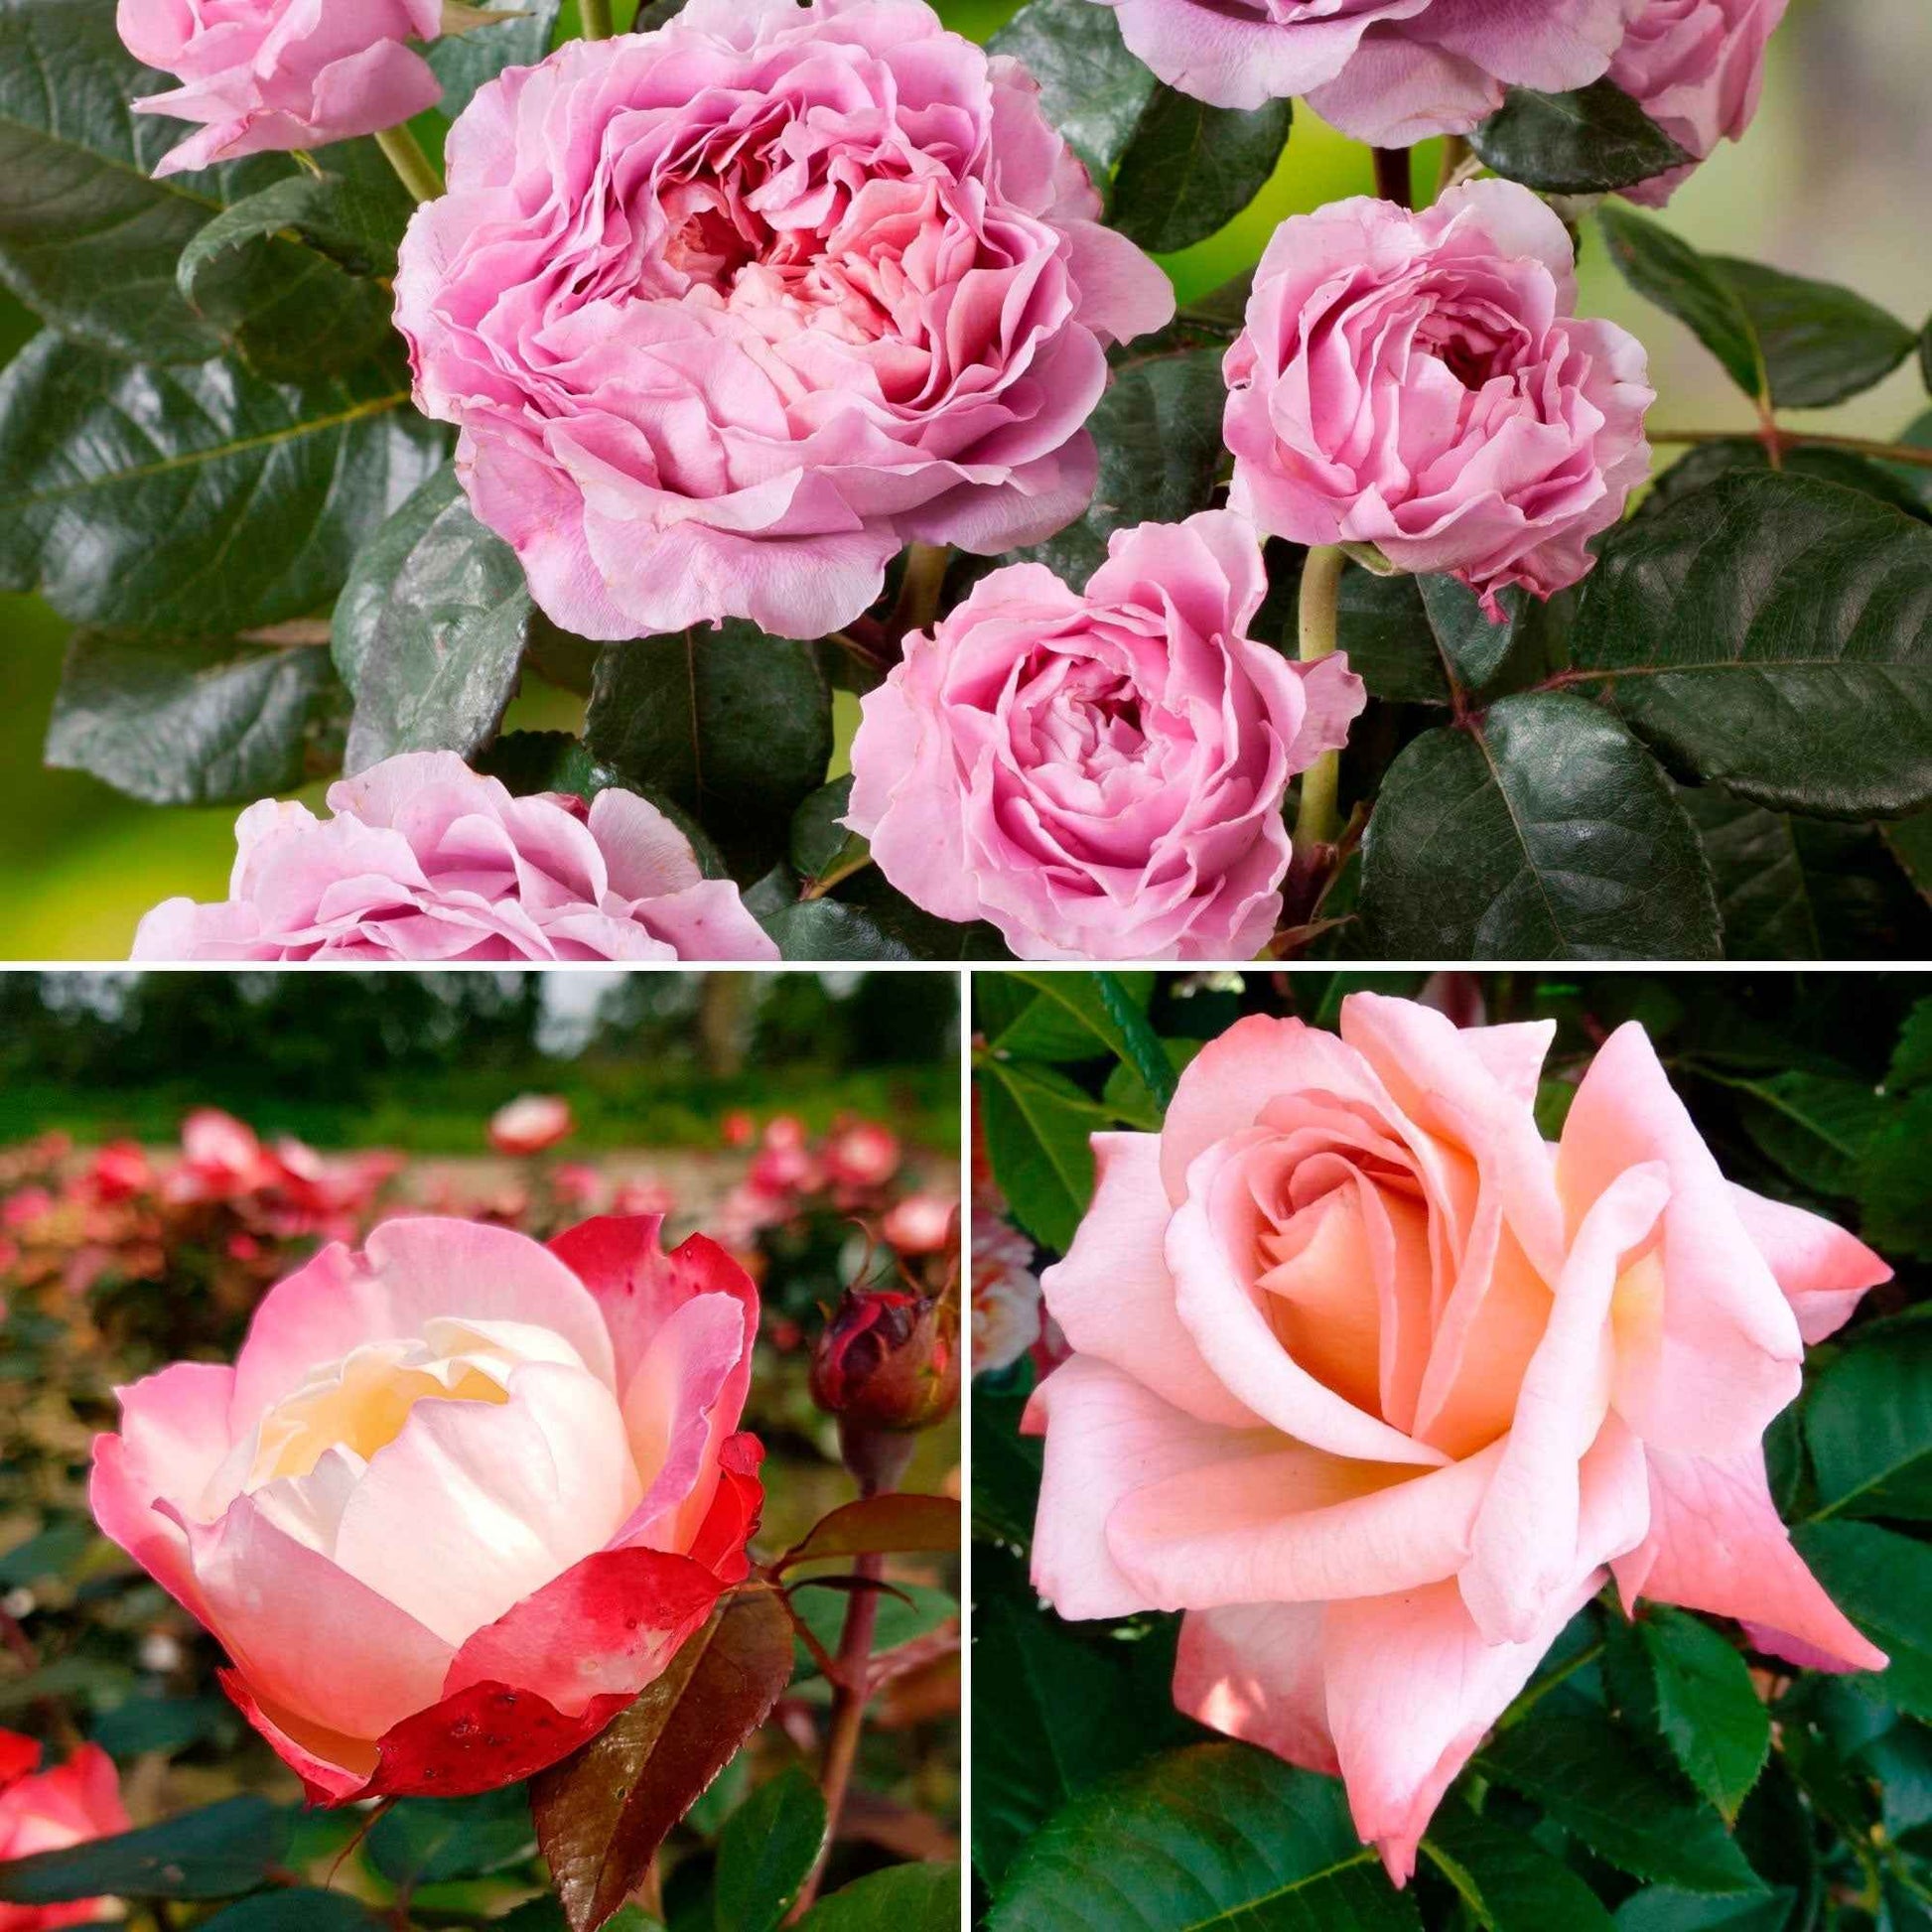 3x Großblütige Rose Rosa 'Nostalgischer Duft' Gemischt  - Wurzelnackte Pflanzen - Winterhart - Großblumige Rosen